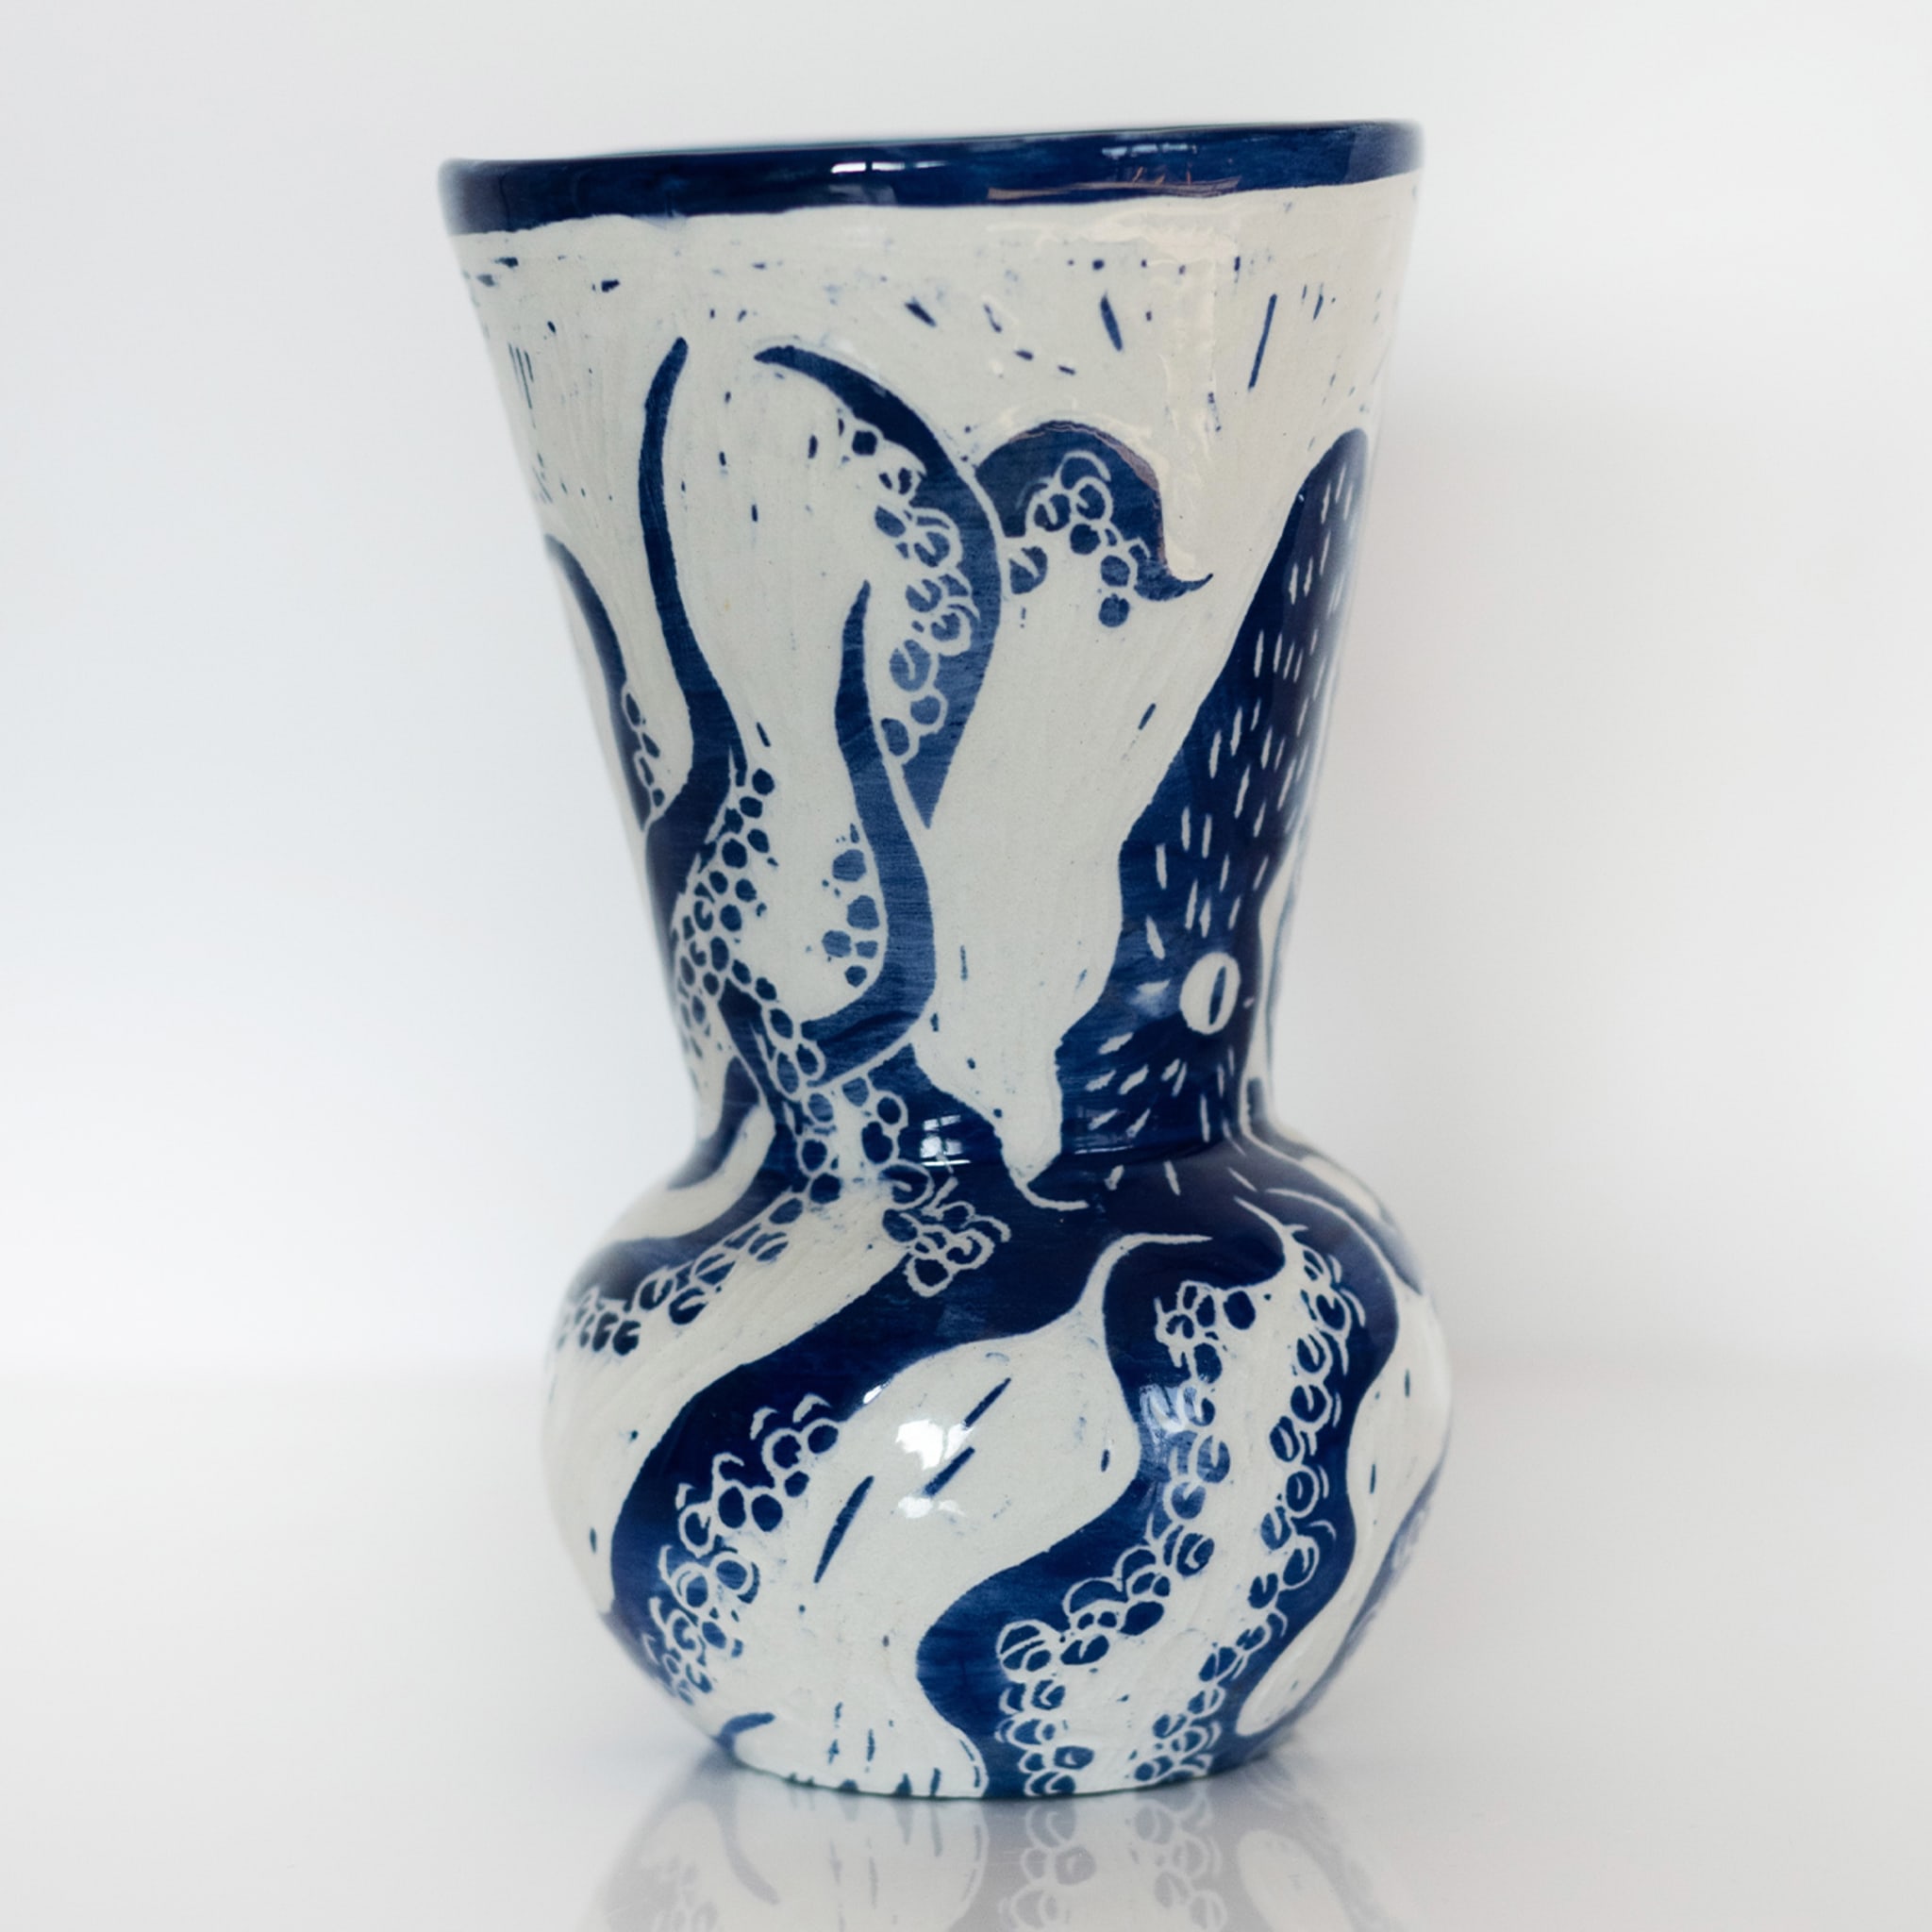 Polpo White and Blue Ceramic Vase - Alternative view 1